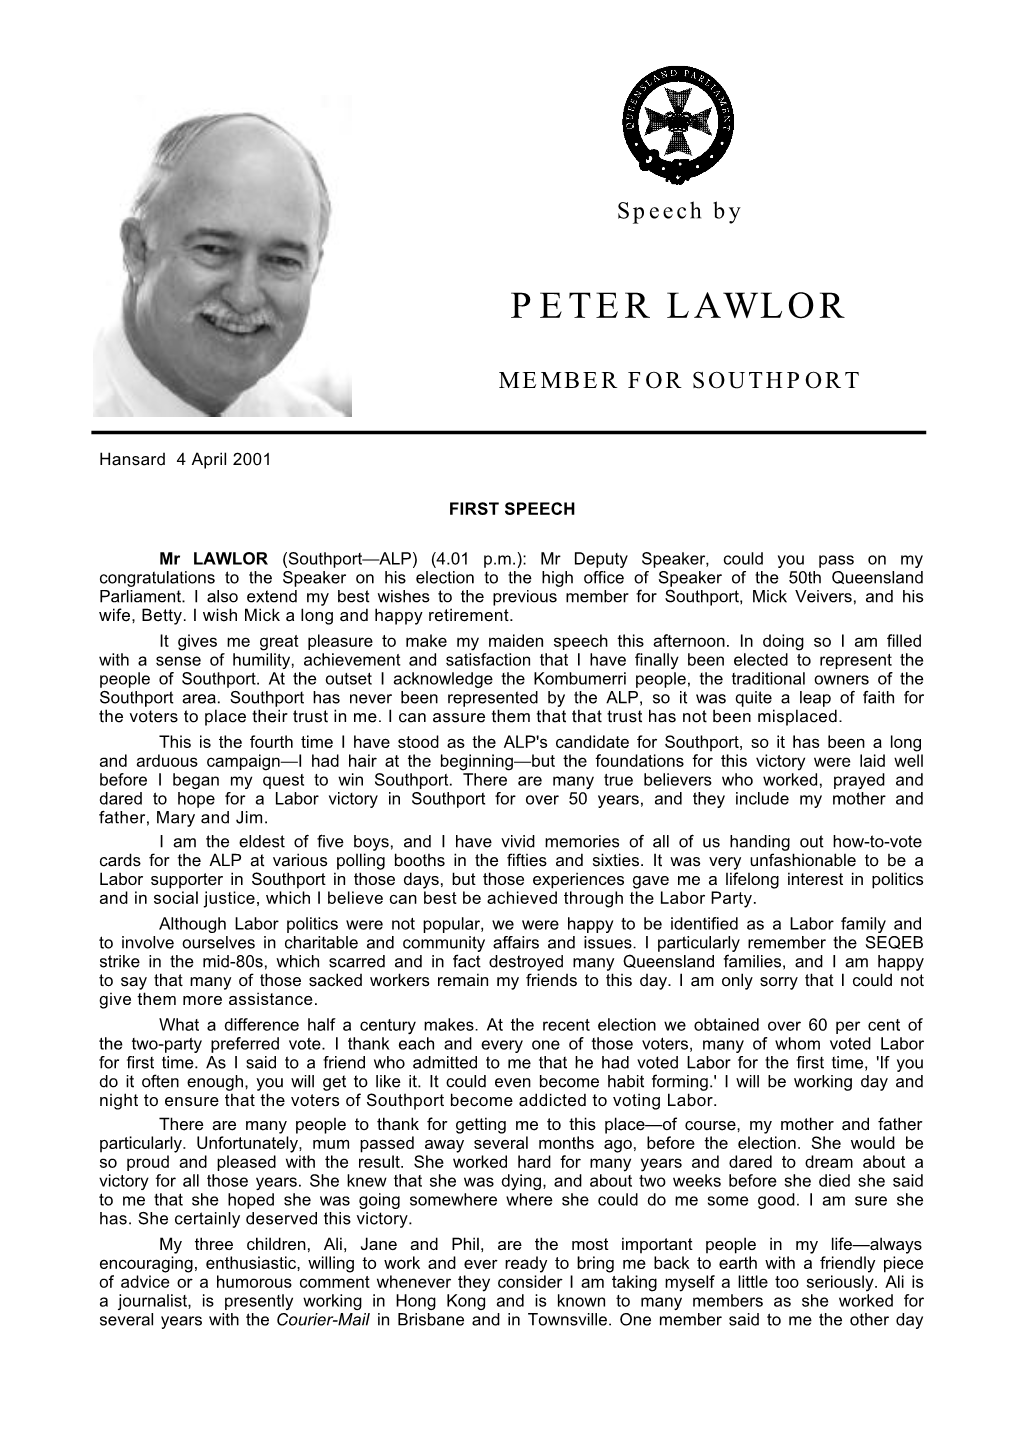 Peter Lawlor